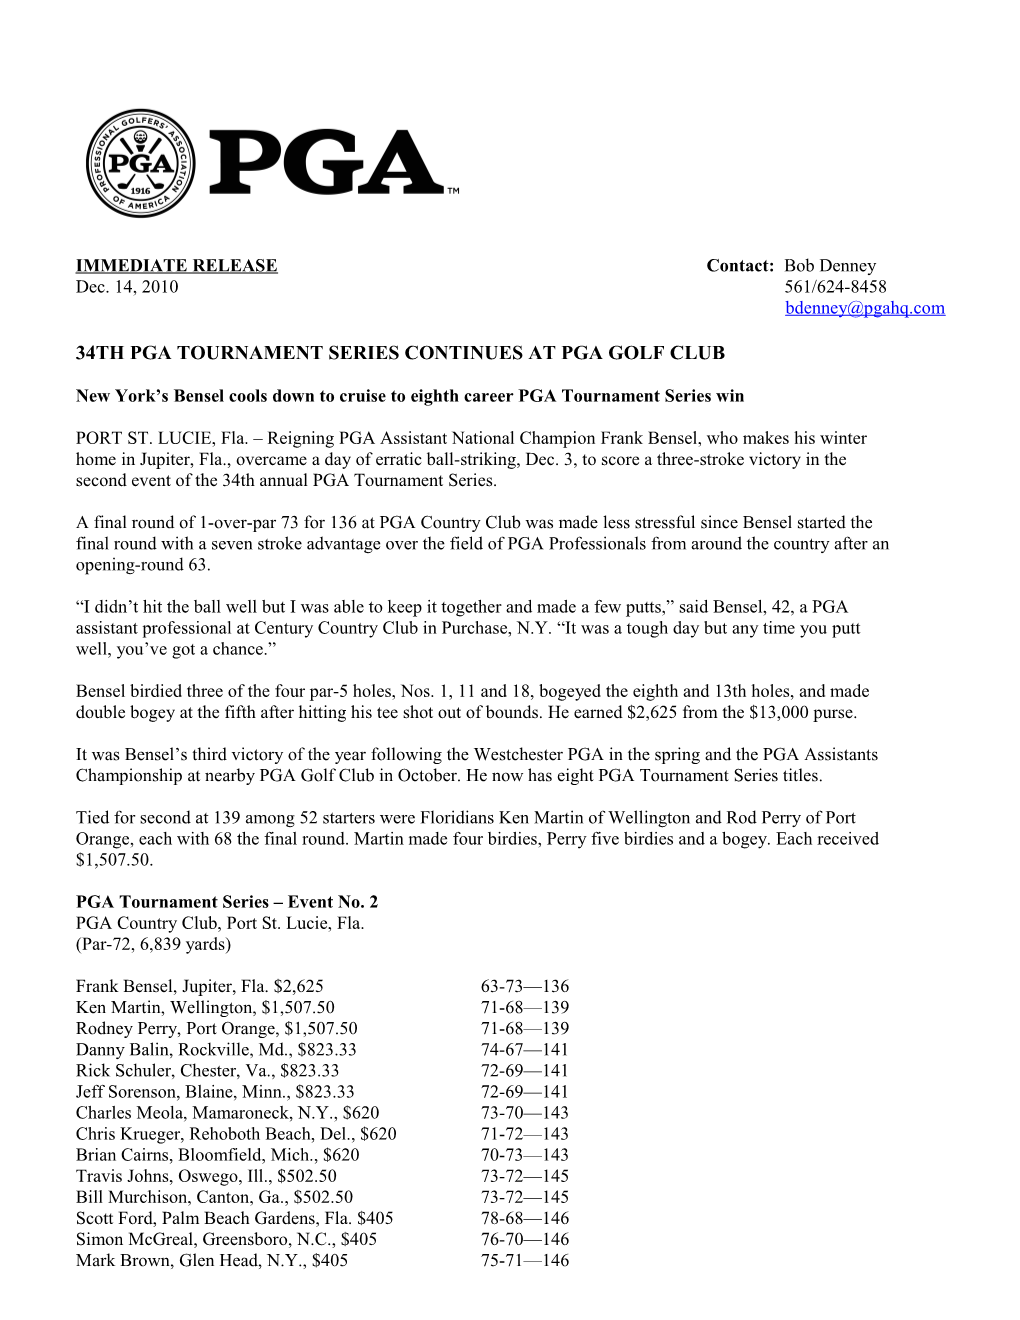 34Th Pga Tournament Series Continues at Pga Golf Club